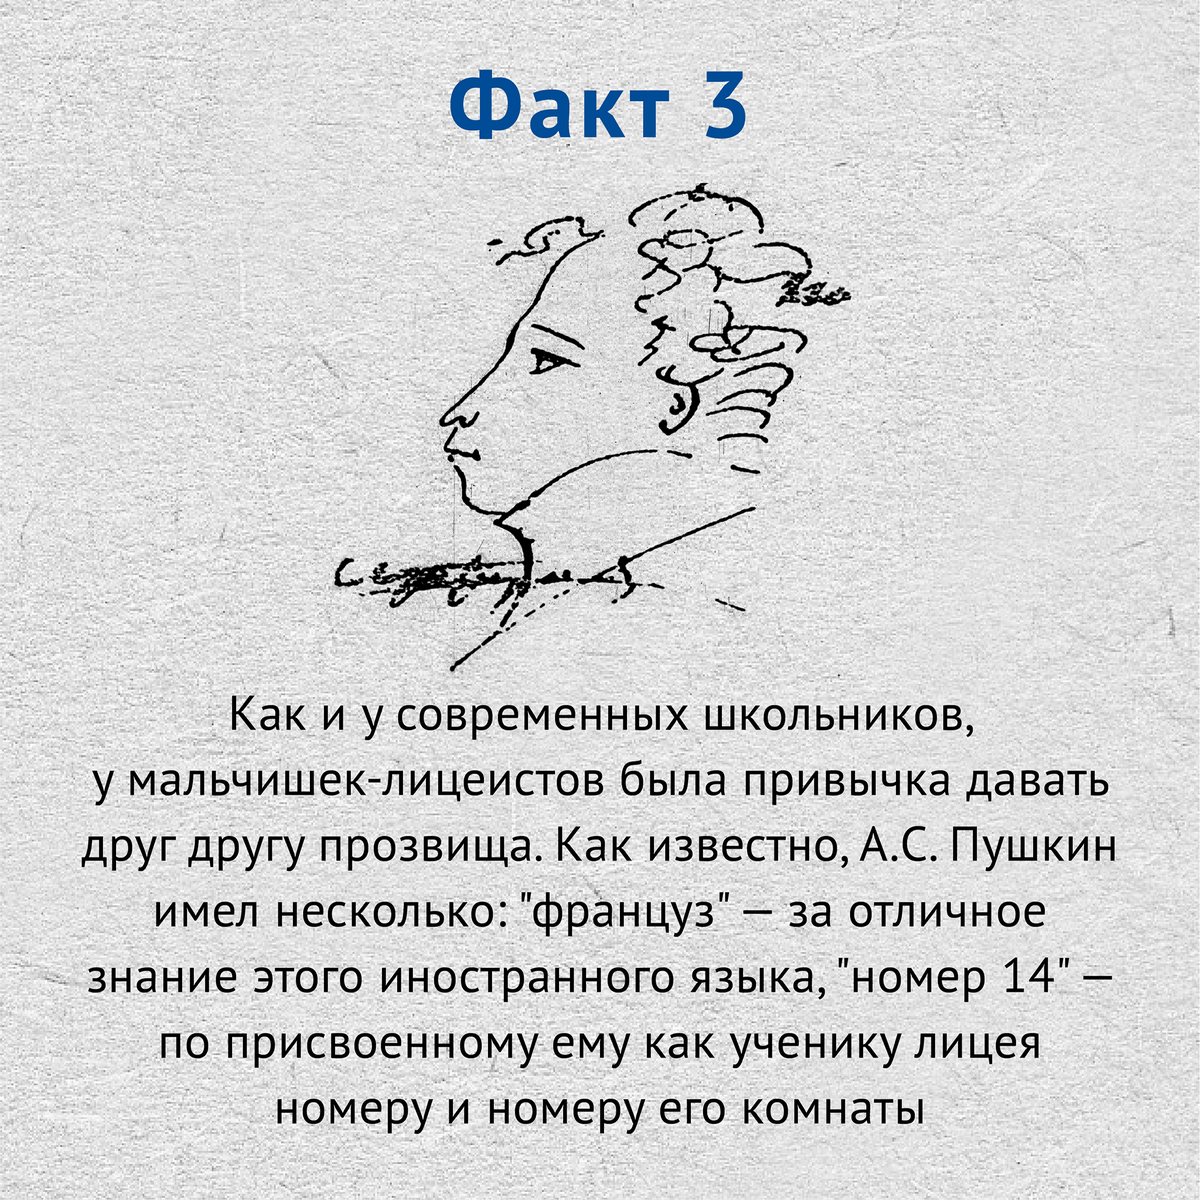 Интересные факты о жизни Пушкине